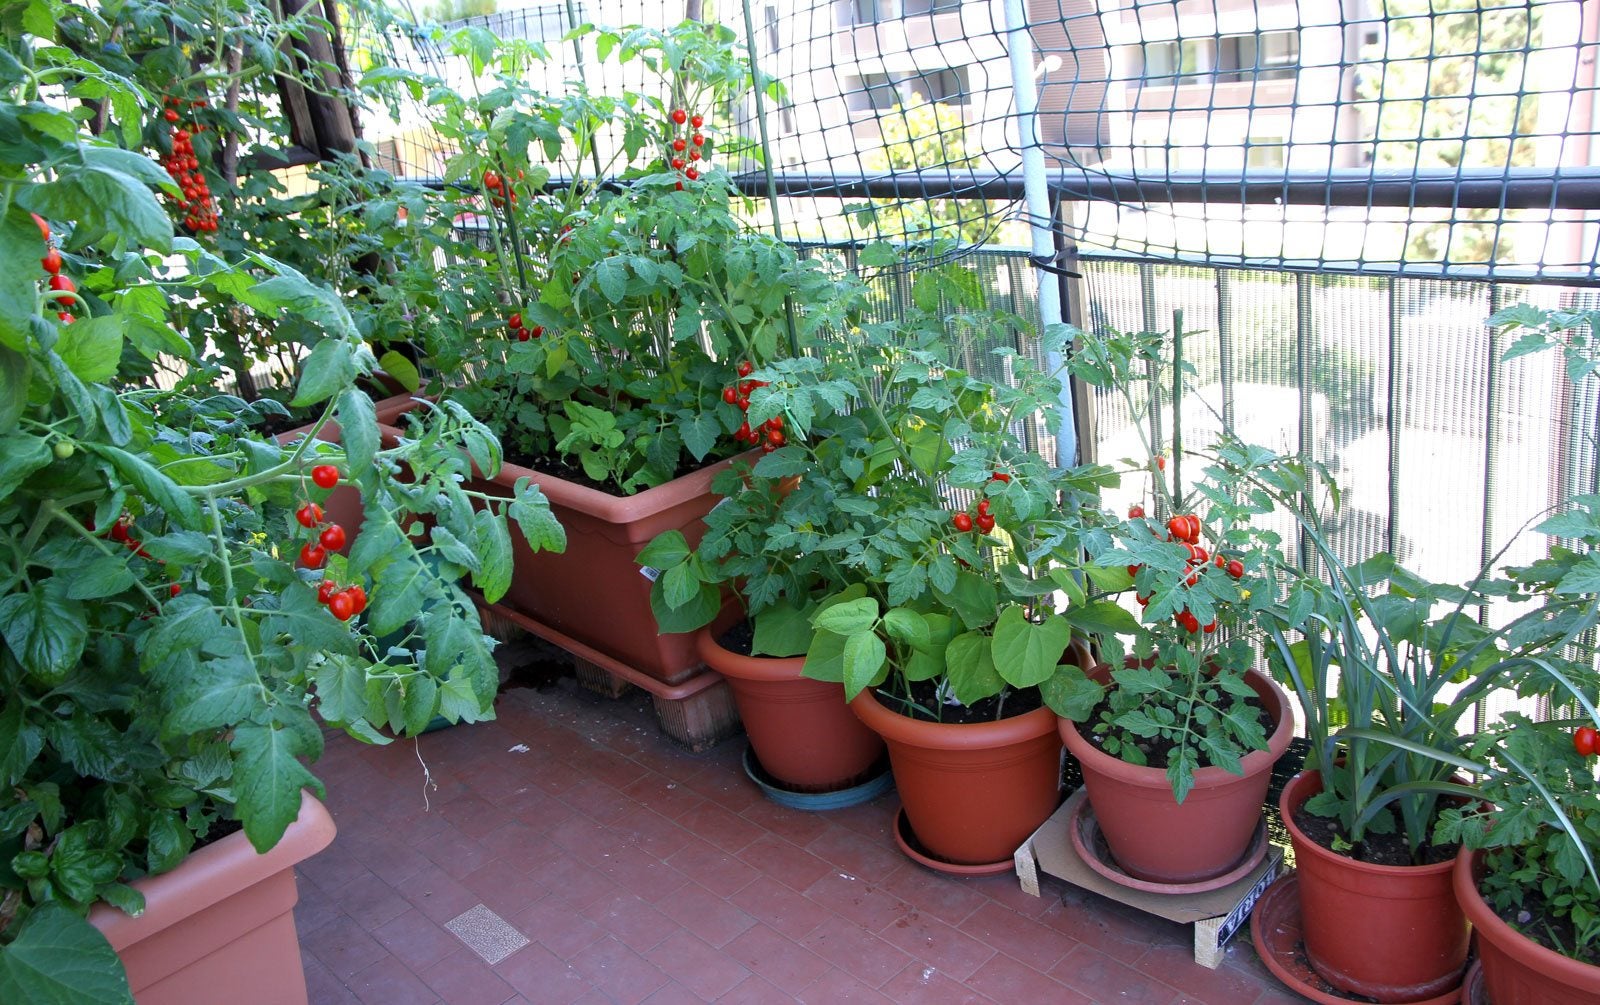 Urban balcony garden with tomato plants in pots